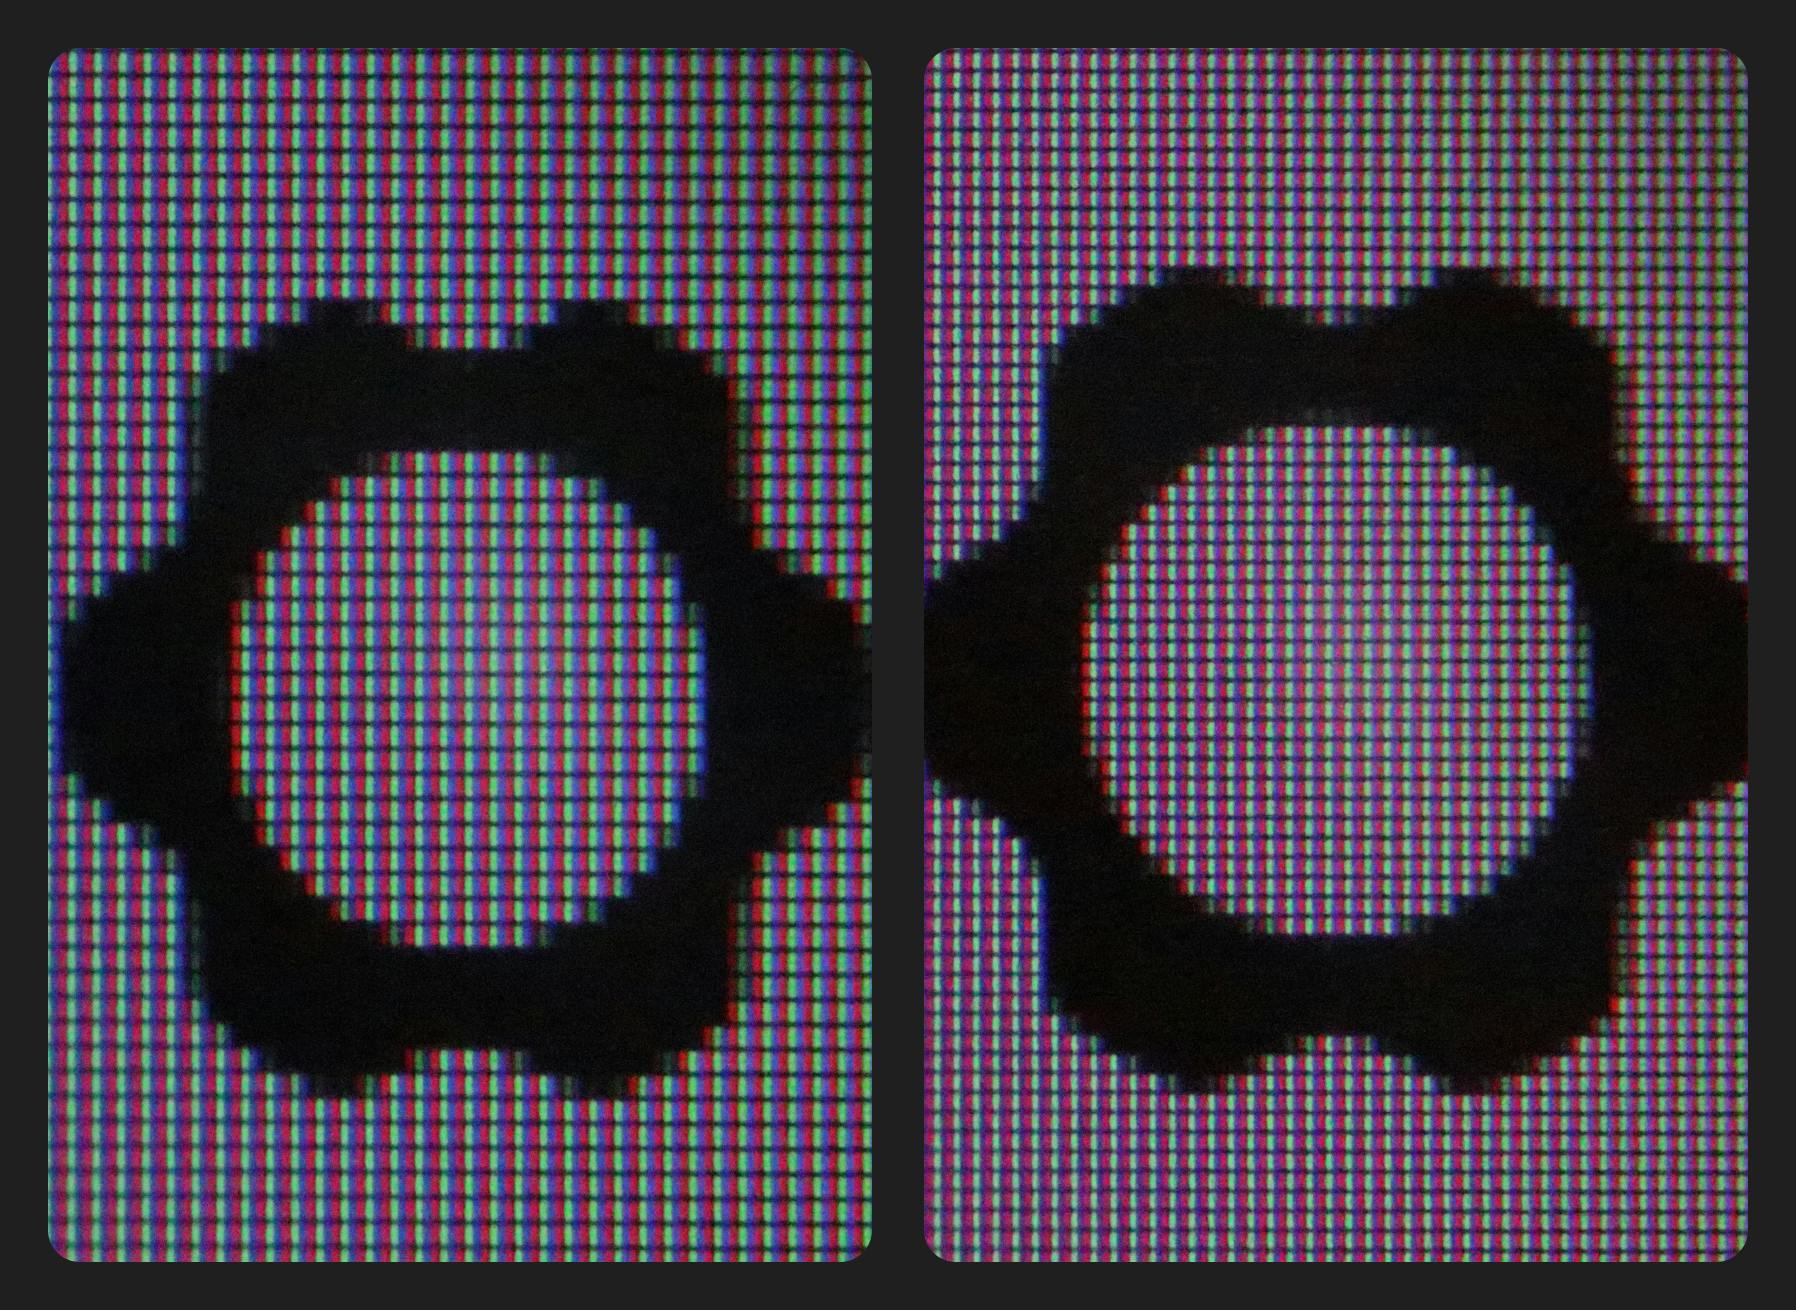 Close up of 2.8k display pixel density